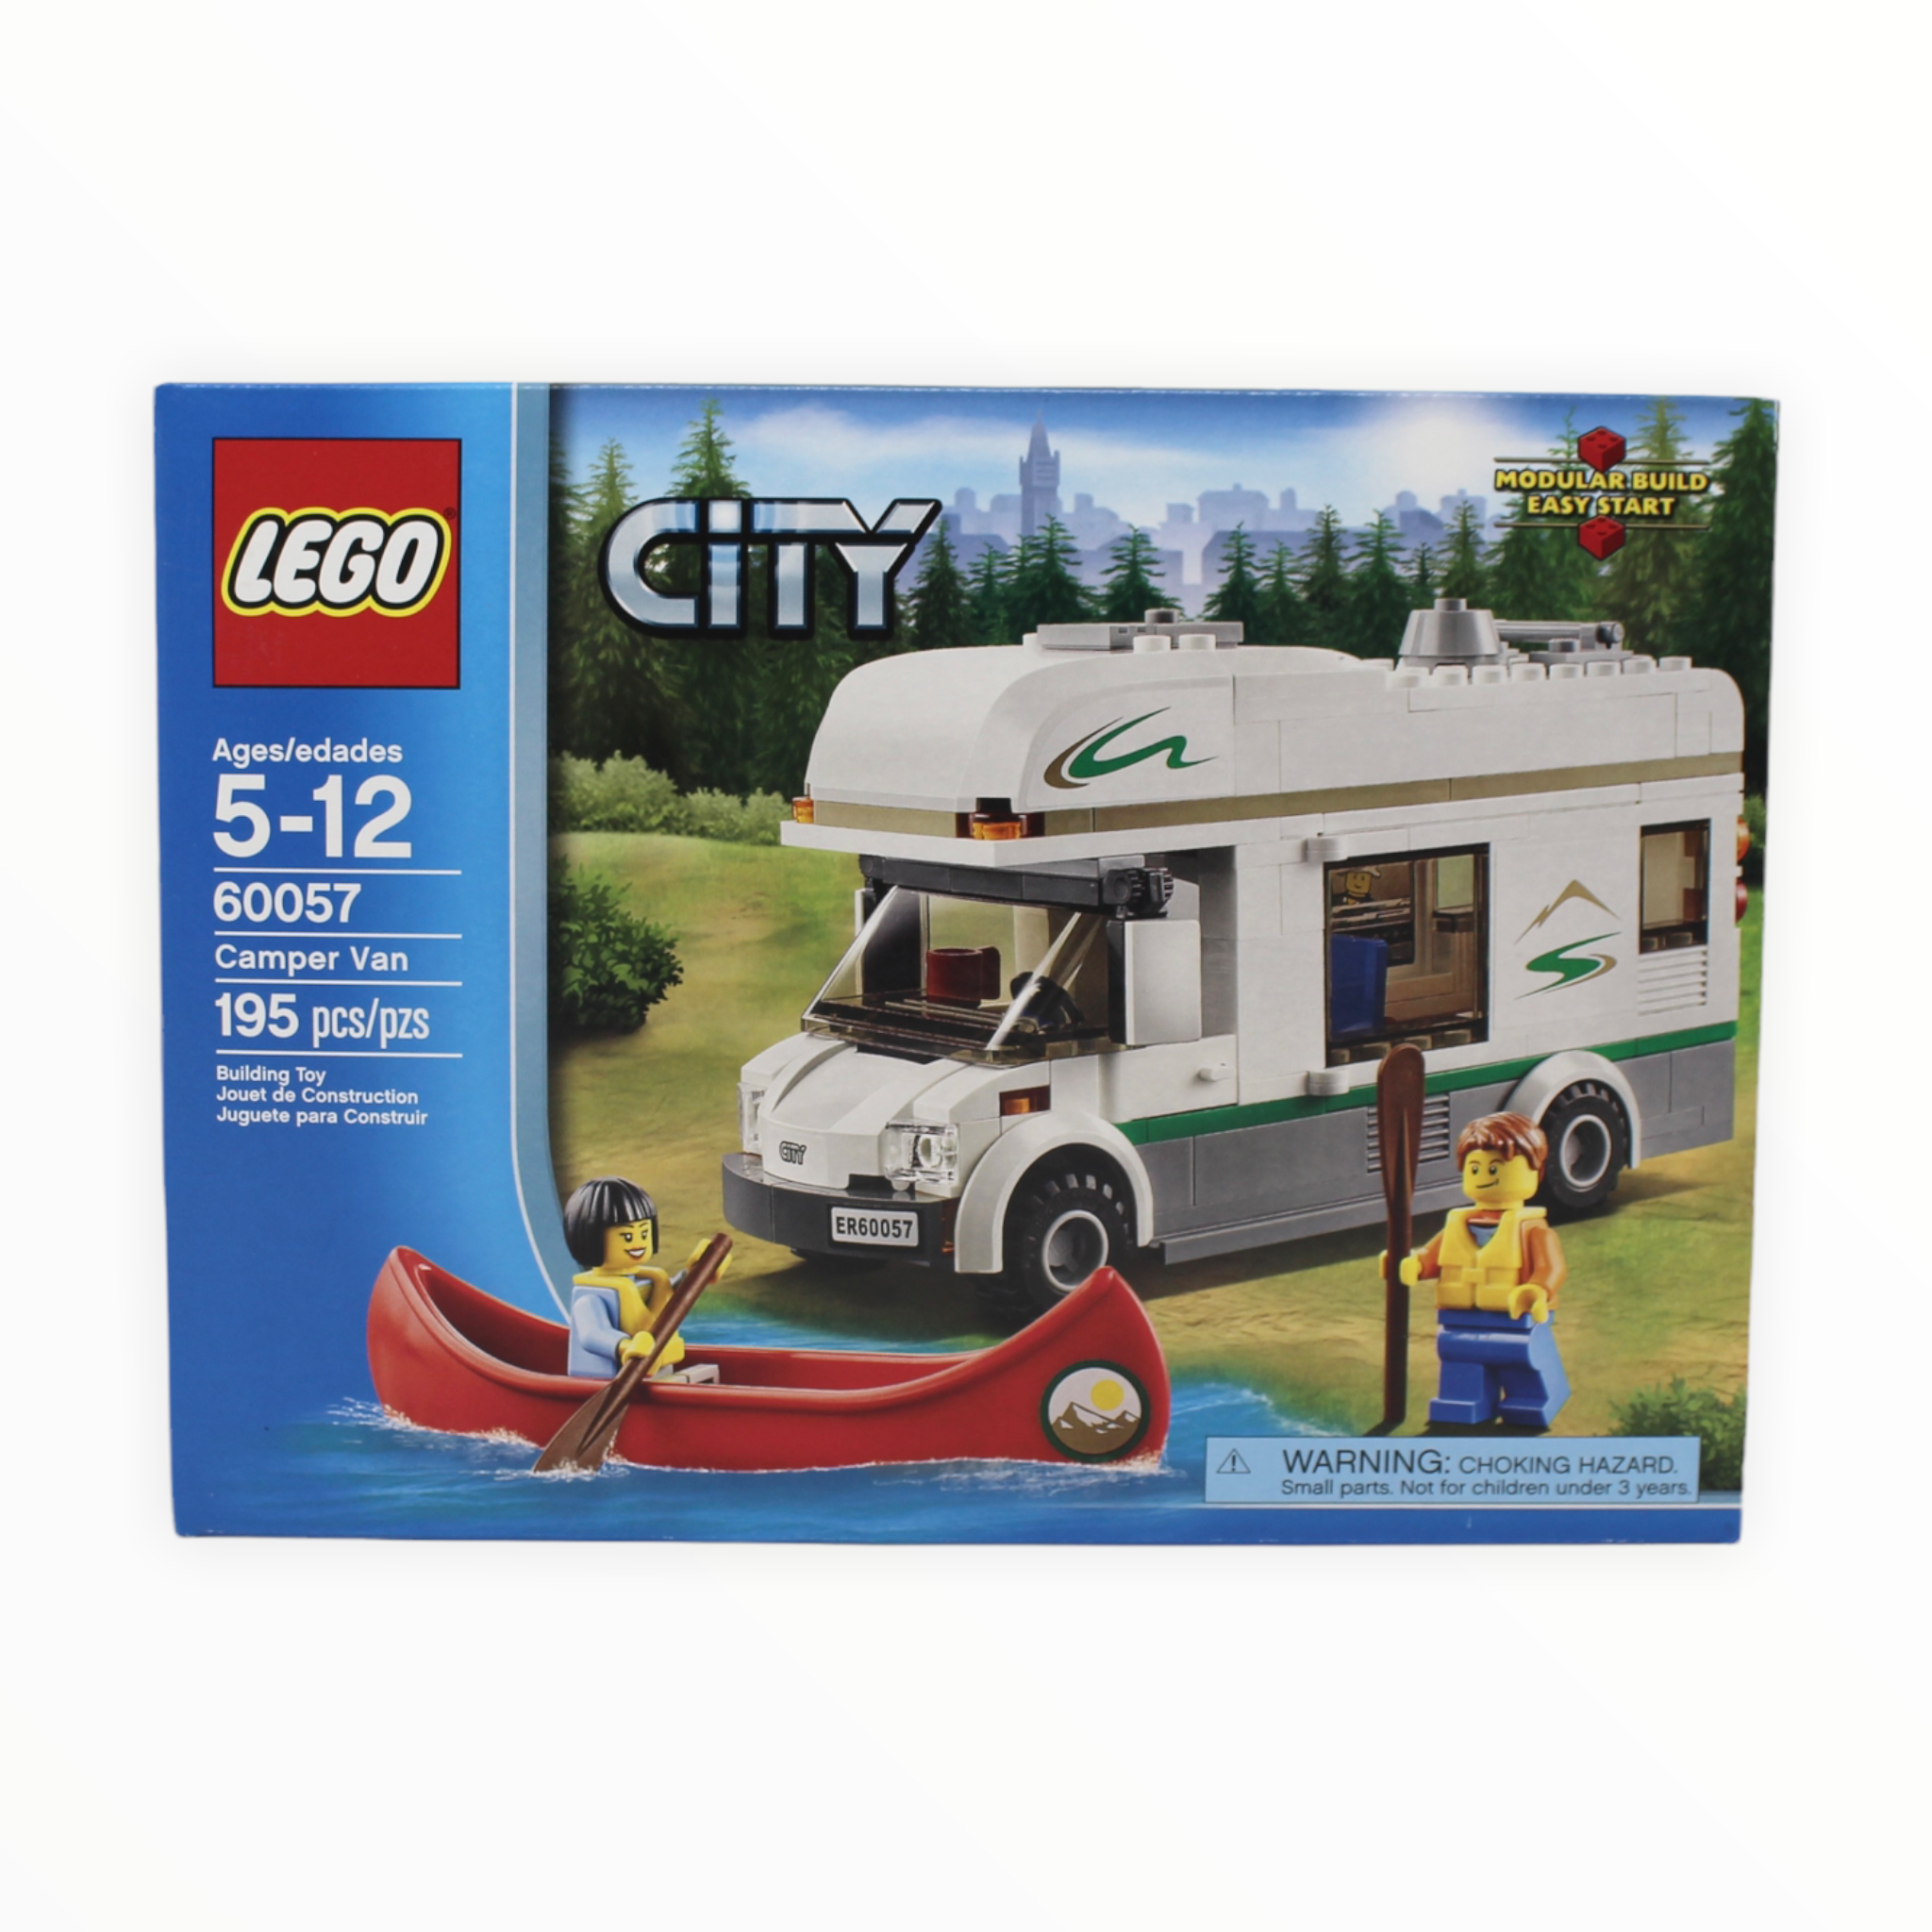 Retired Set 60057 City Camper Van